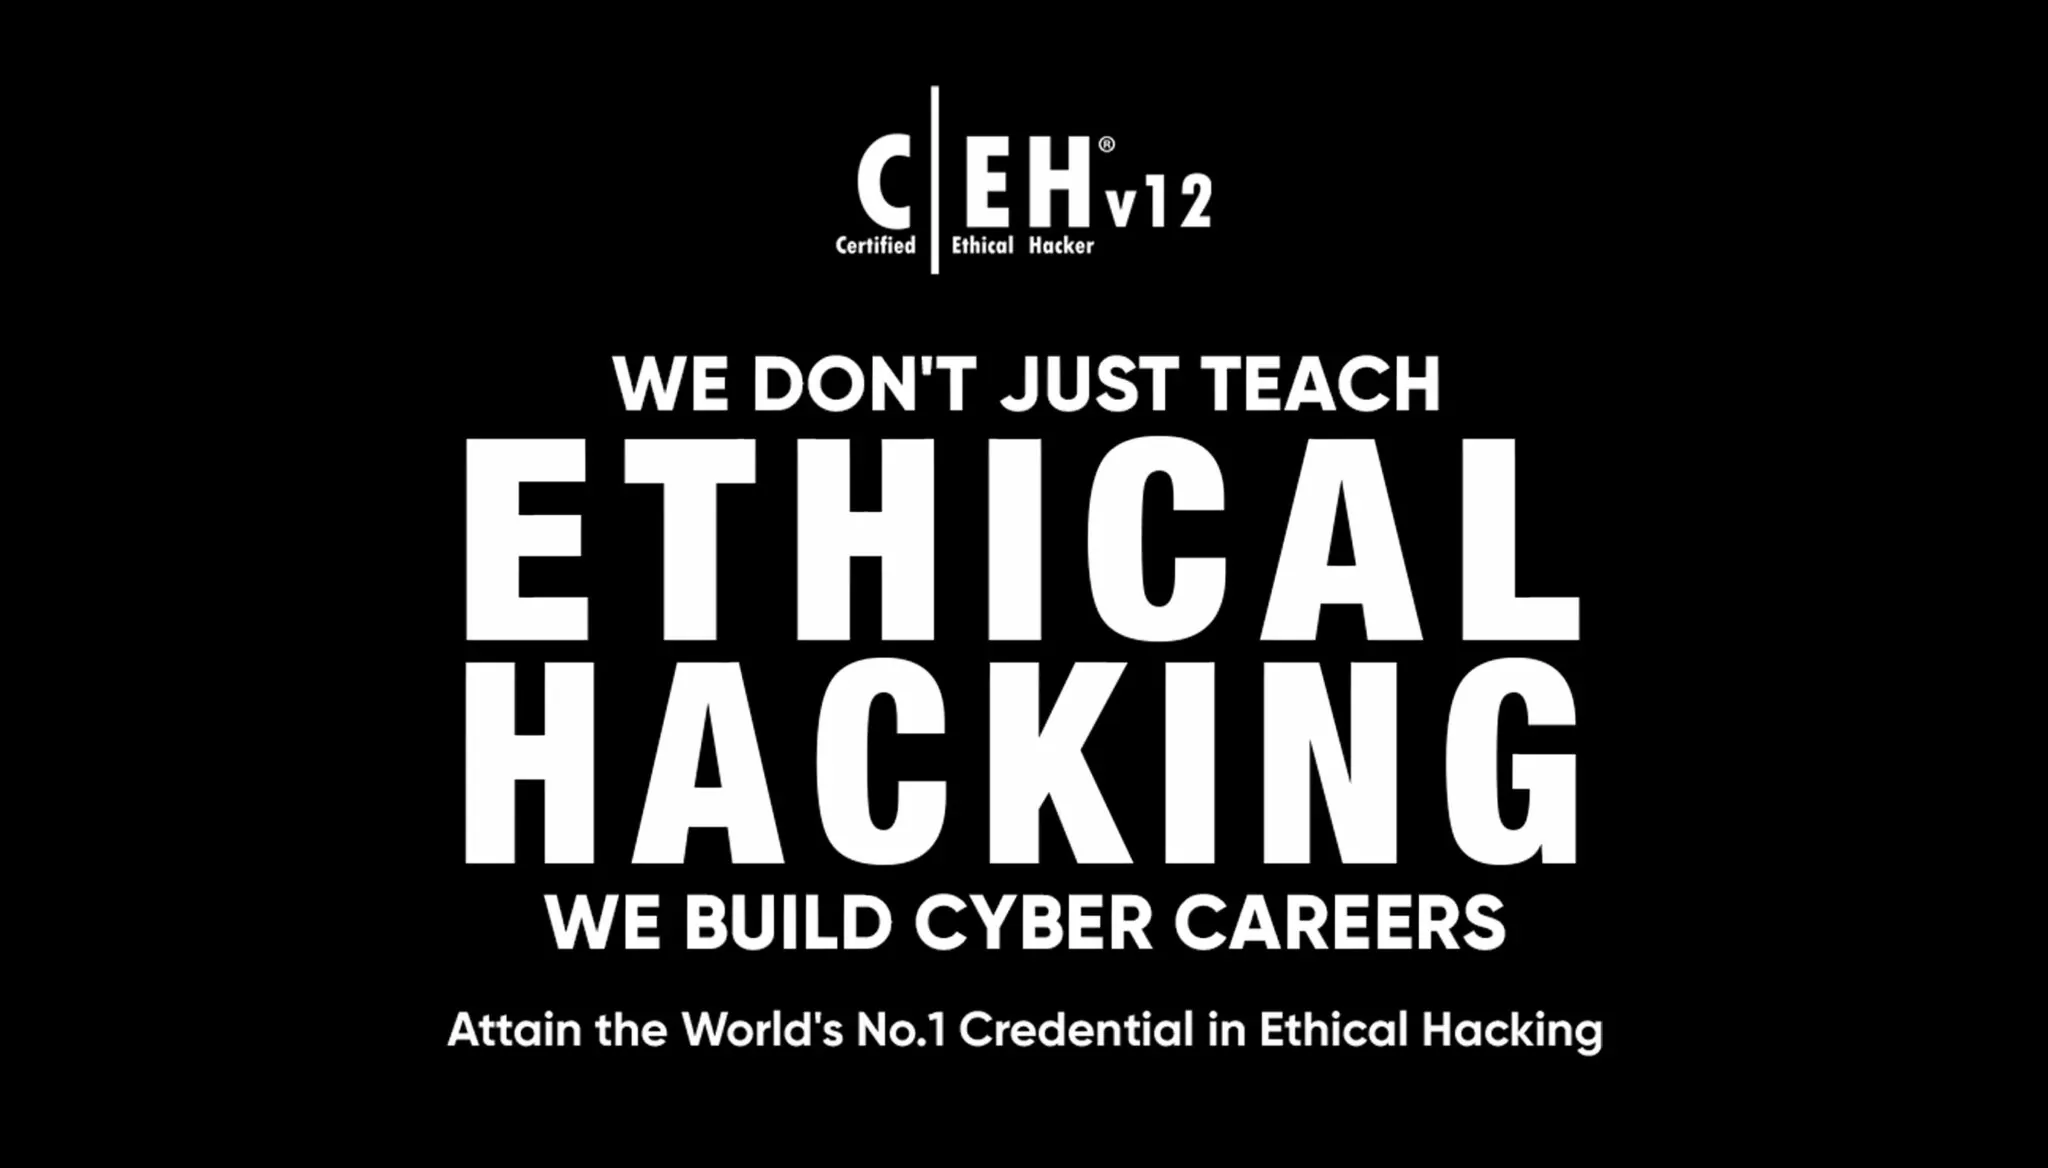 EC-Council – Certified Ethical Hacker (CEHv12 EN)